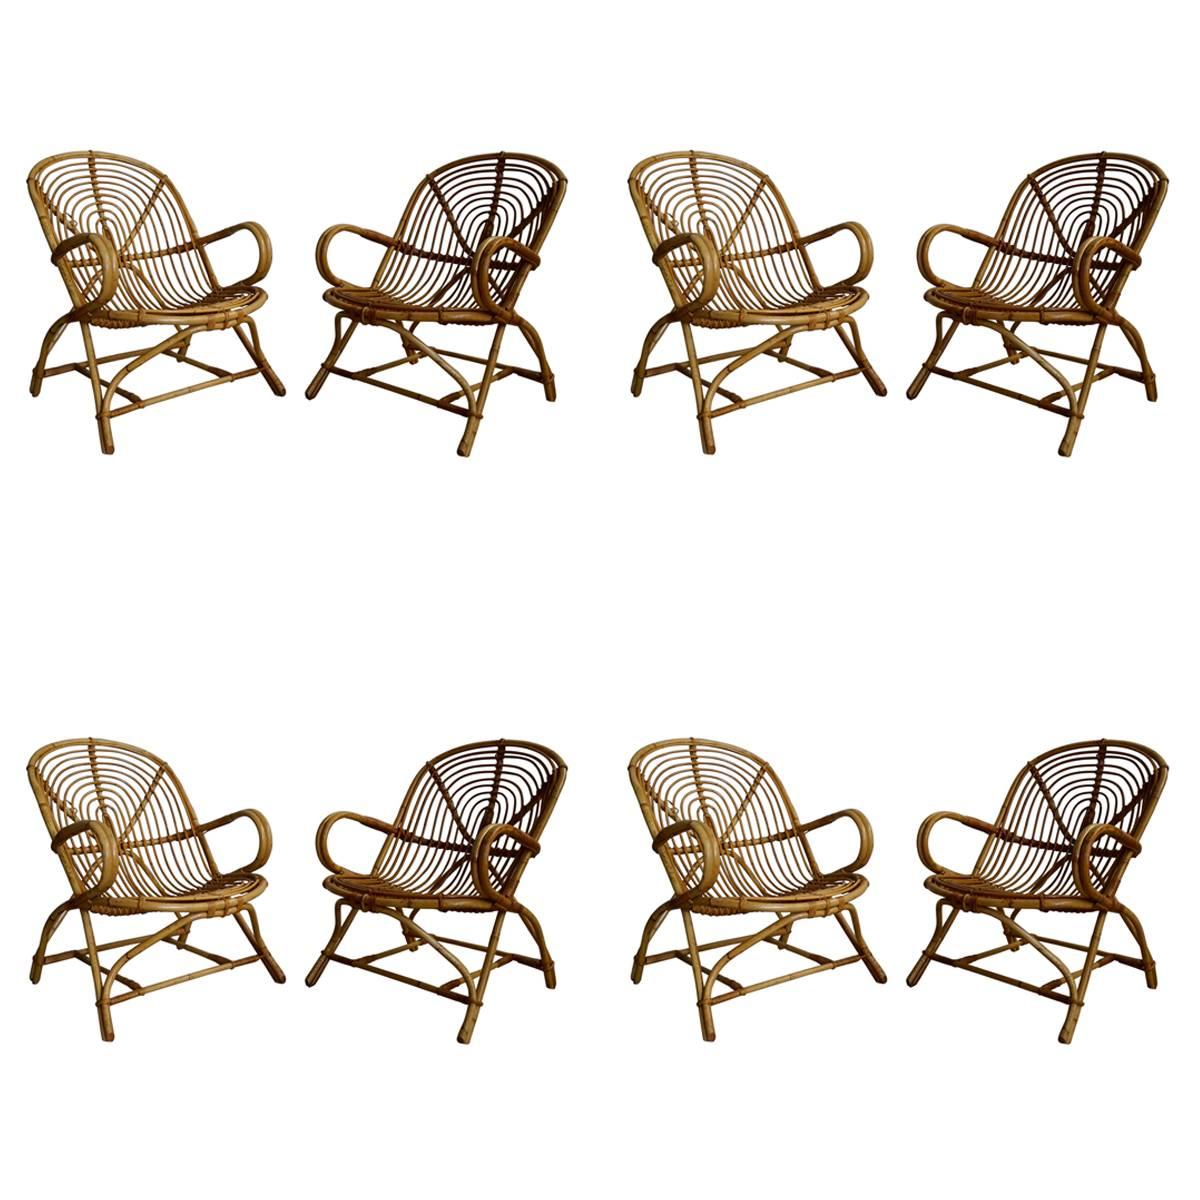 Set of 4 Wicker/ rattan Chairs